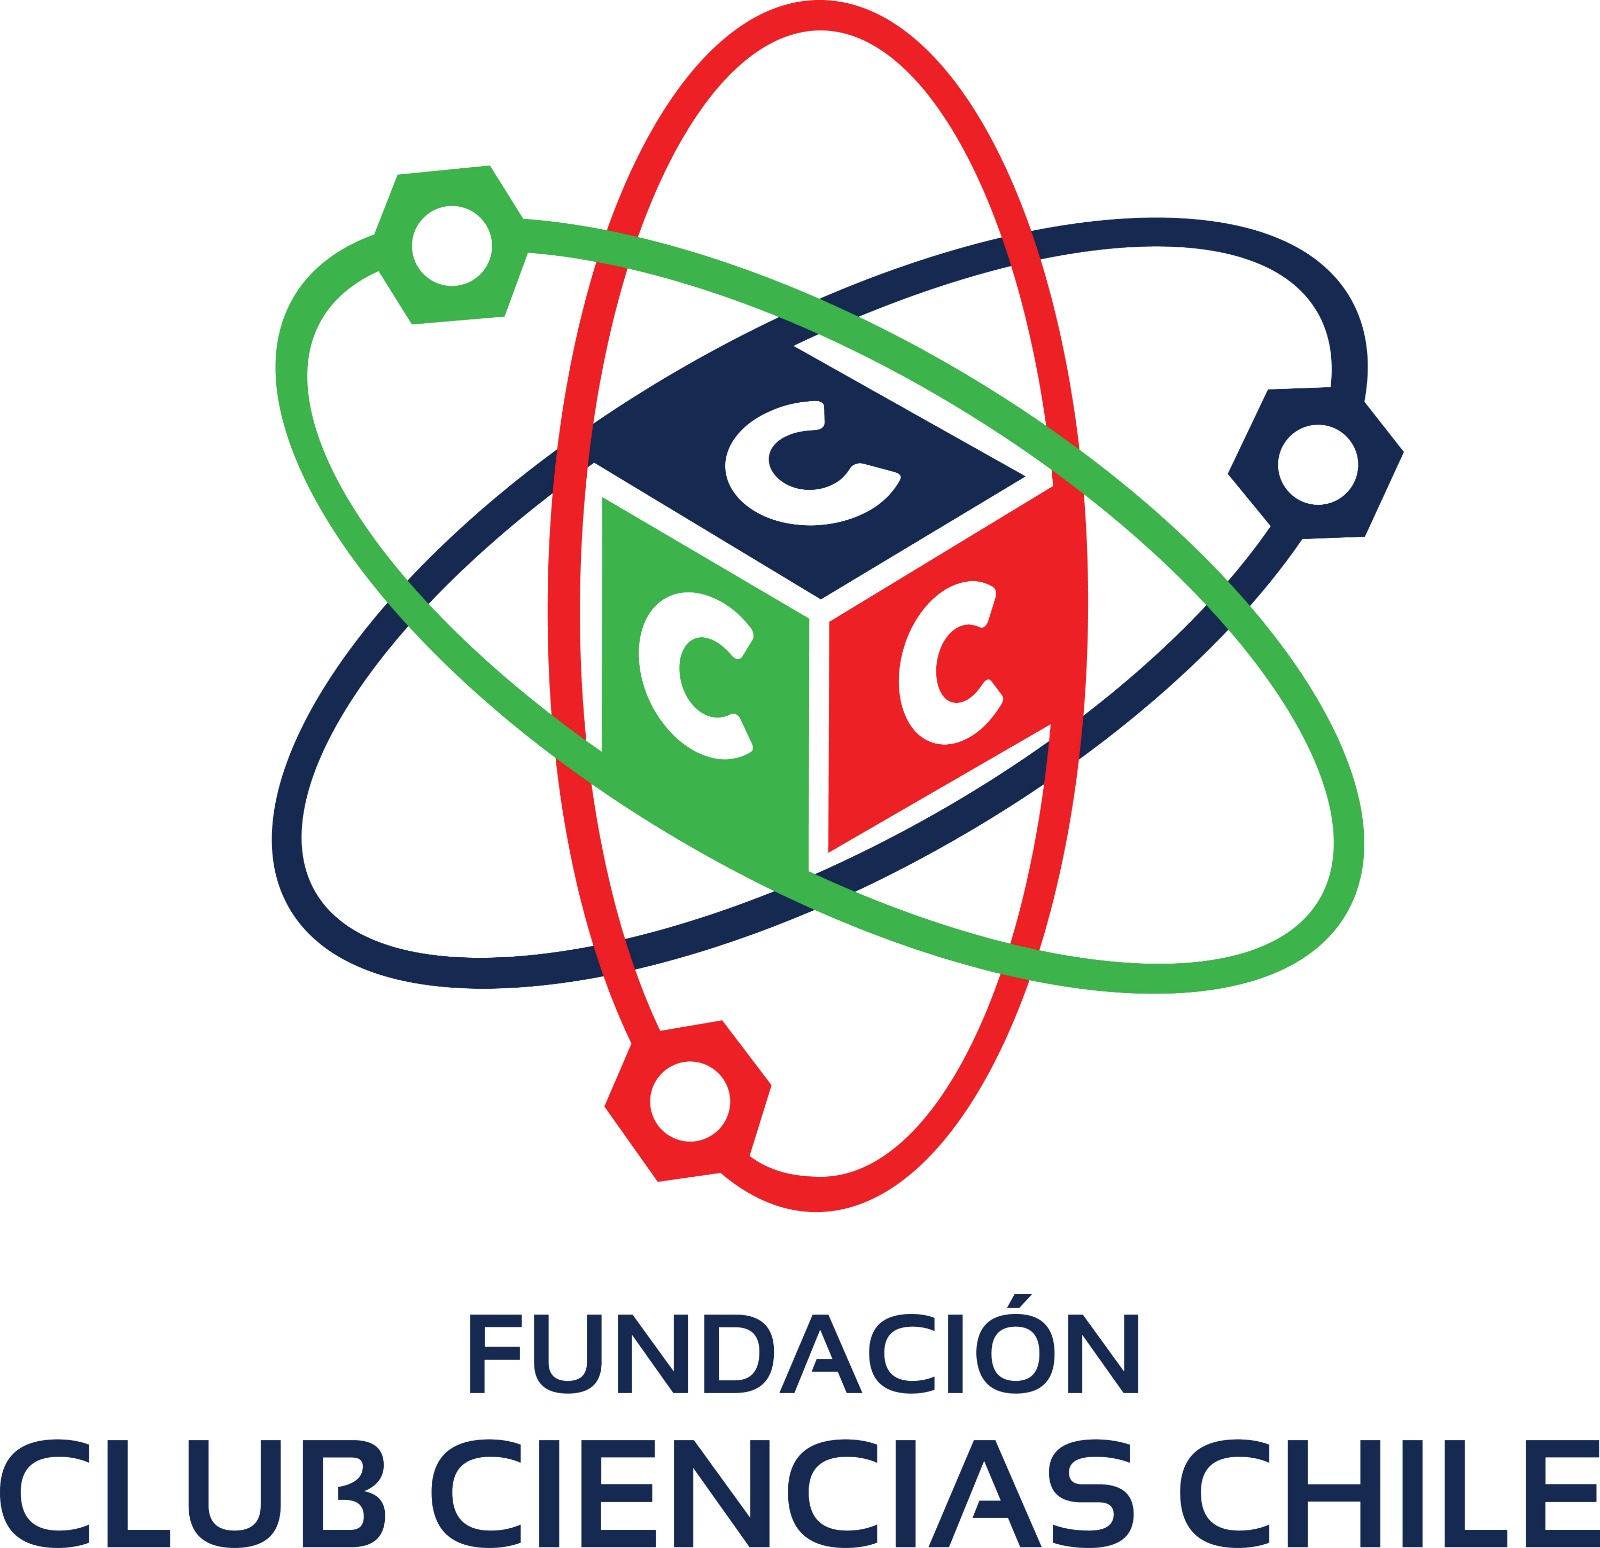 FUNDACION CLUB CIENCIAS CHILE